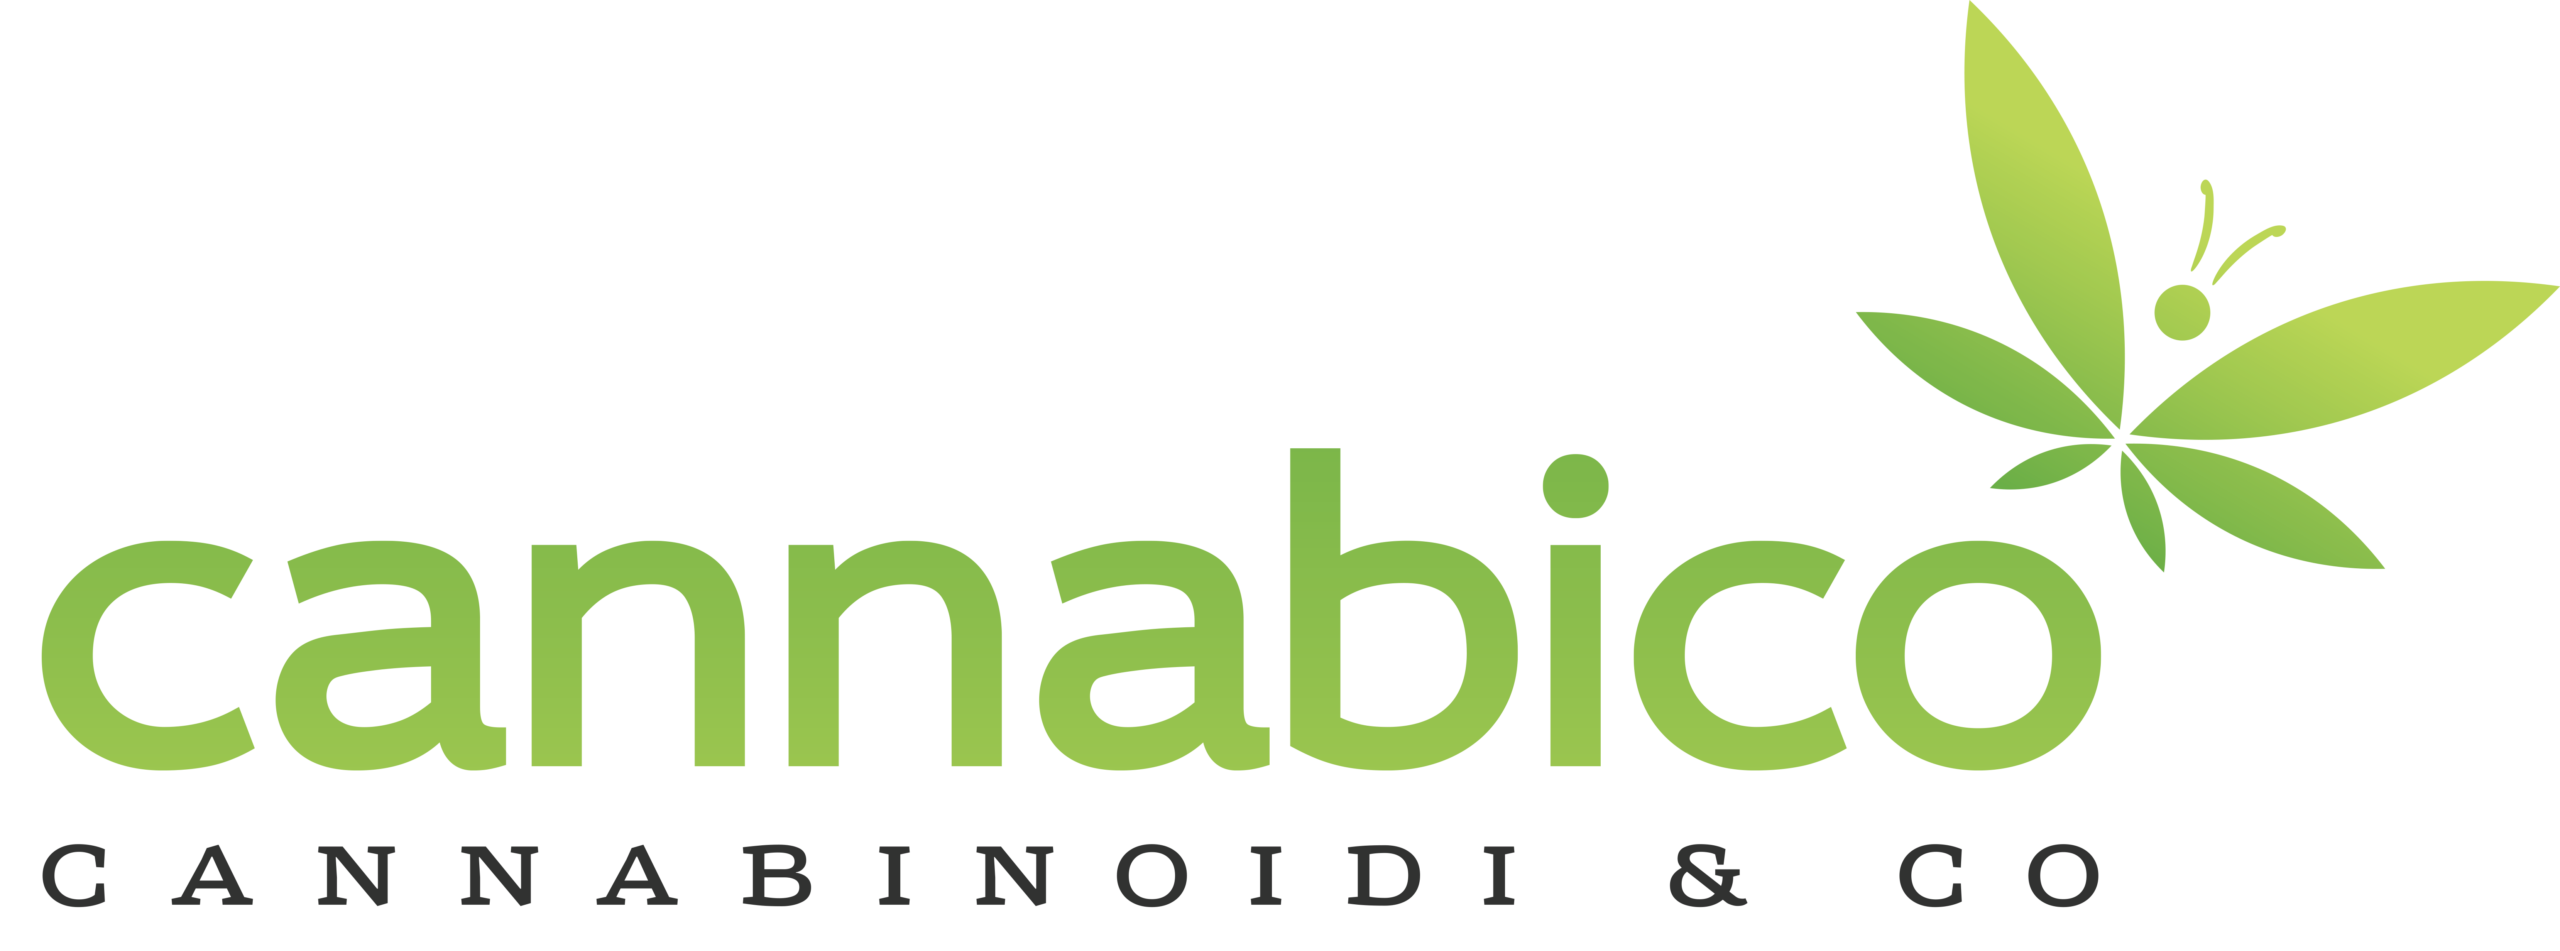 Cannabico – Cannabis light legale, CBD Olio Canapa, Bio Cosmesi Online